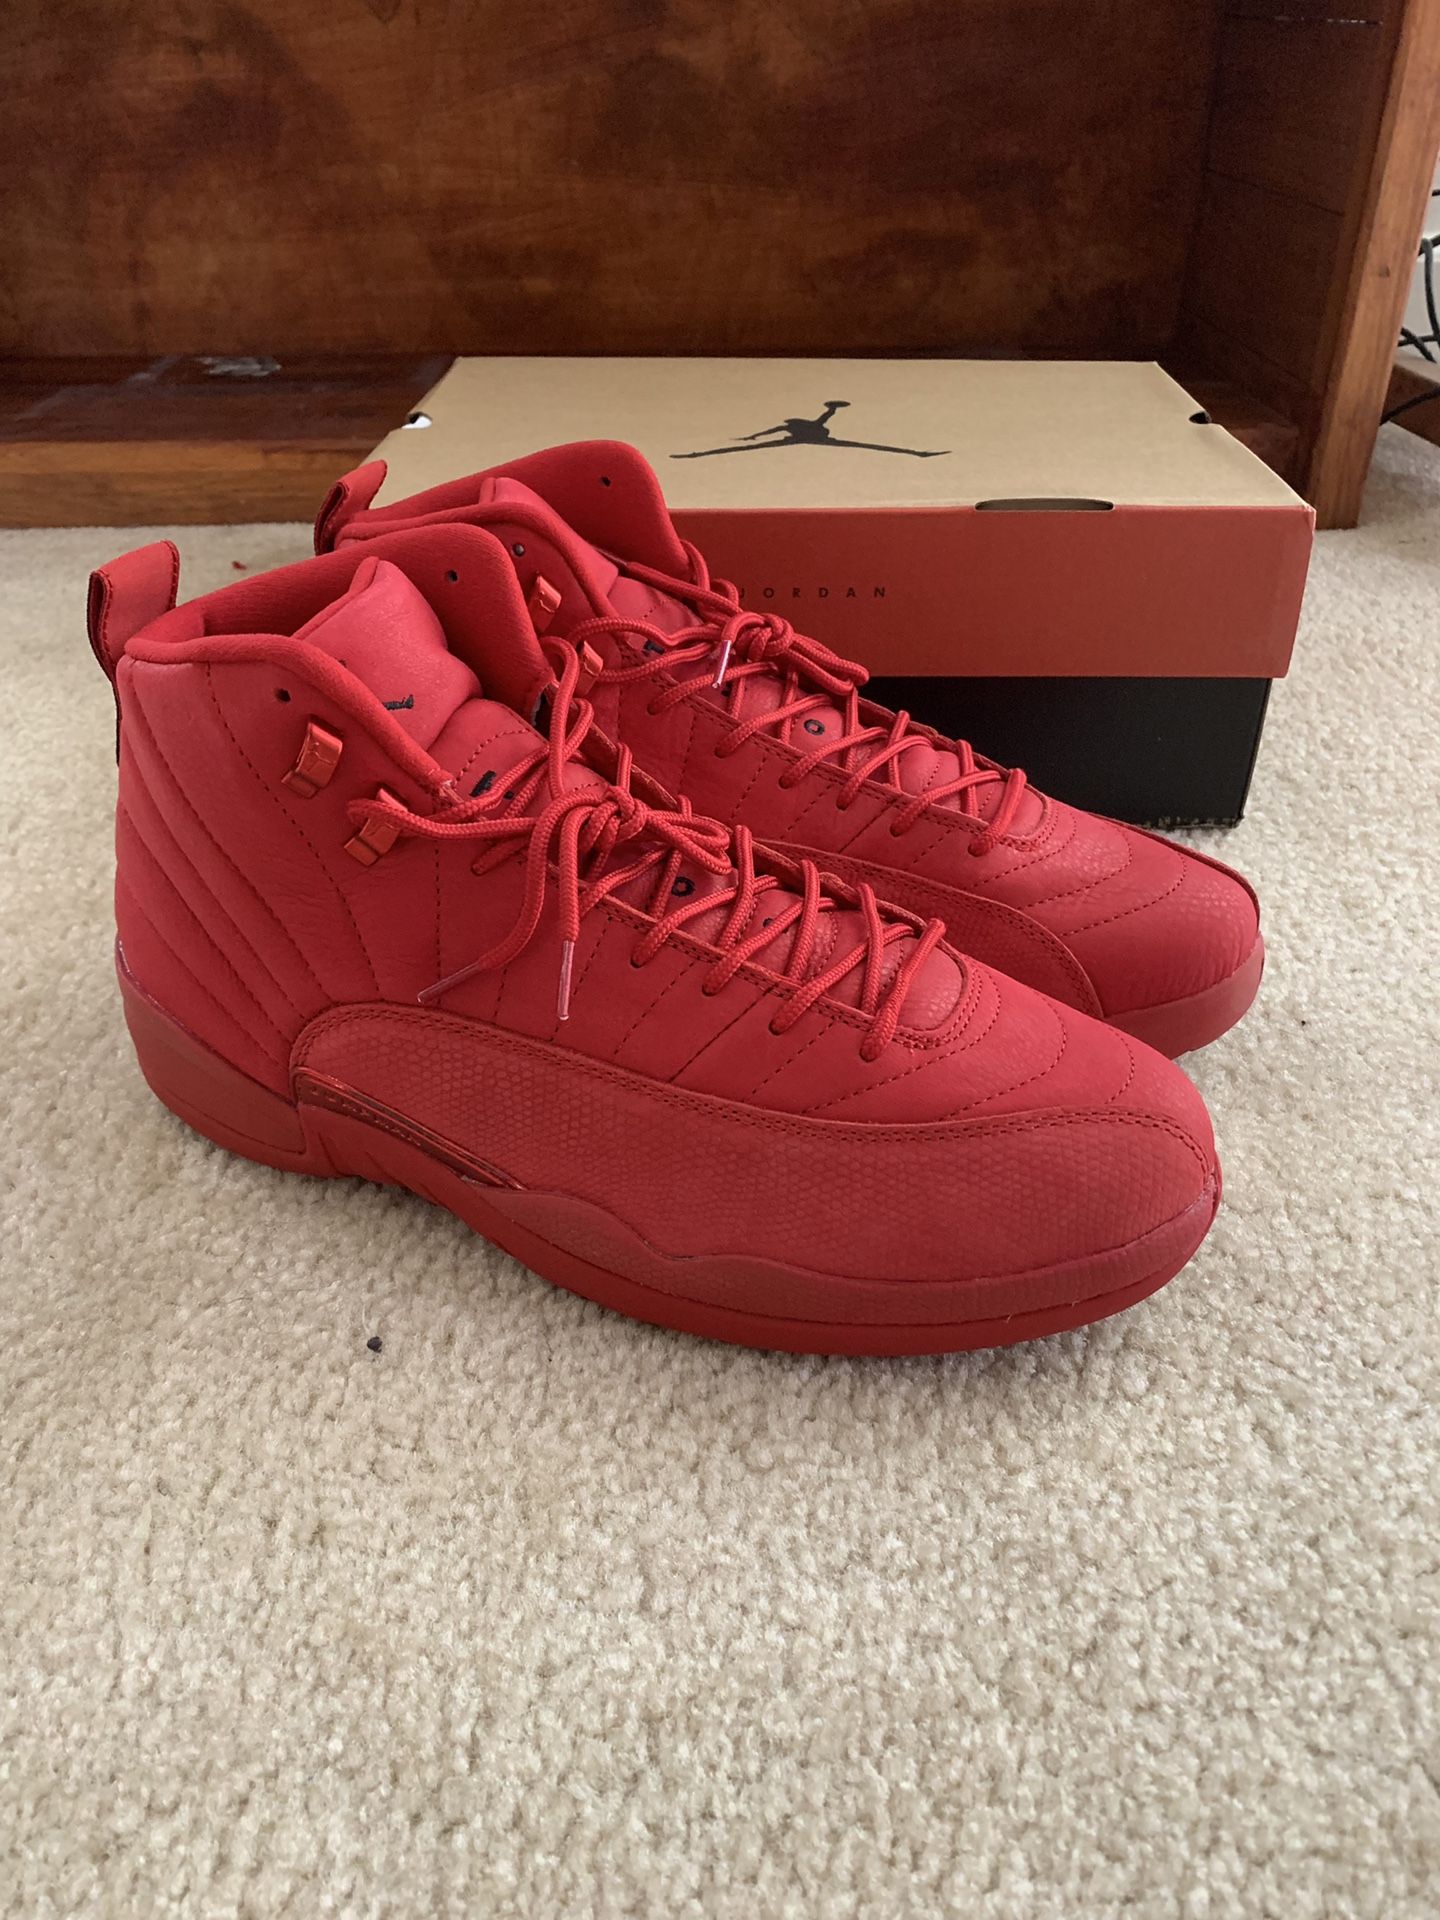 Size 13 Air Jordan Gym Red 12